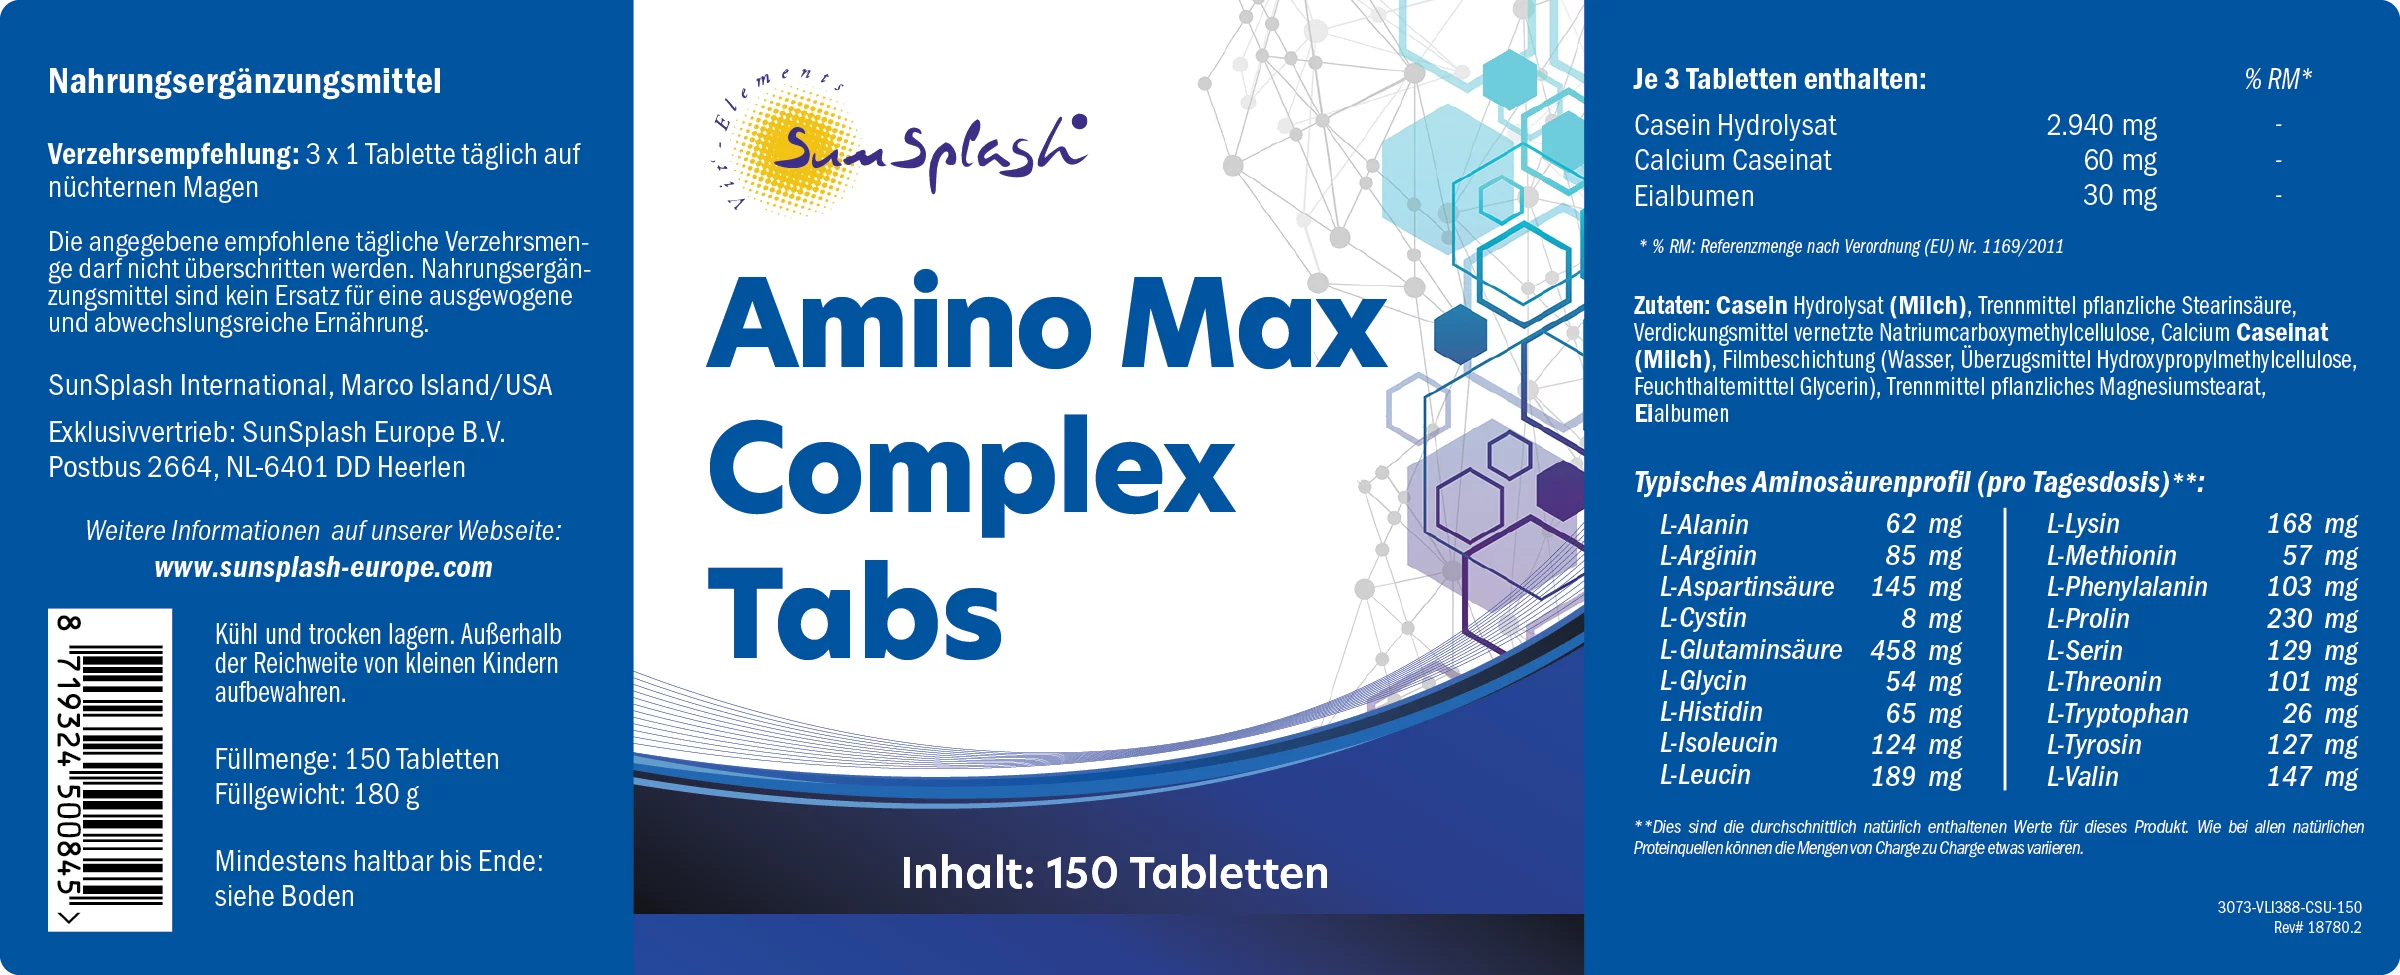 Amino Max Complex Tabs (150 Tabs)